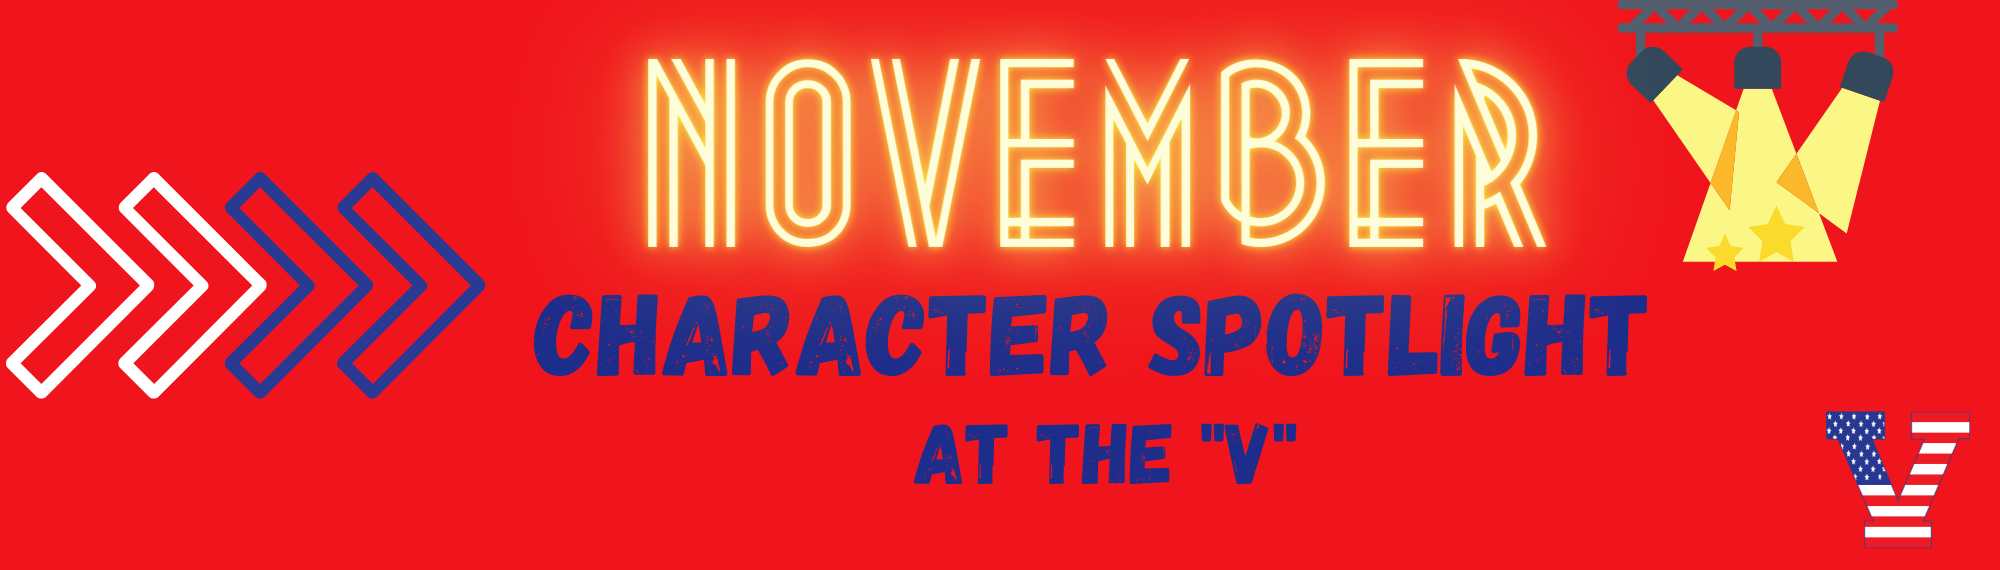 November Character Spotlight